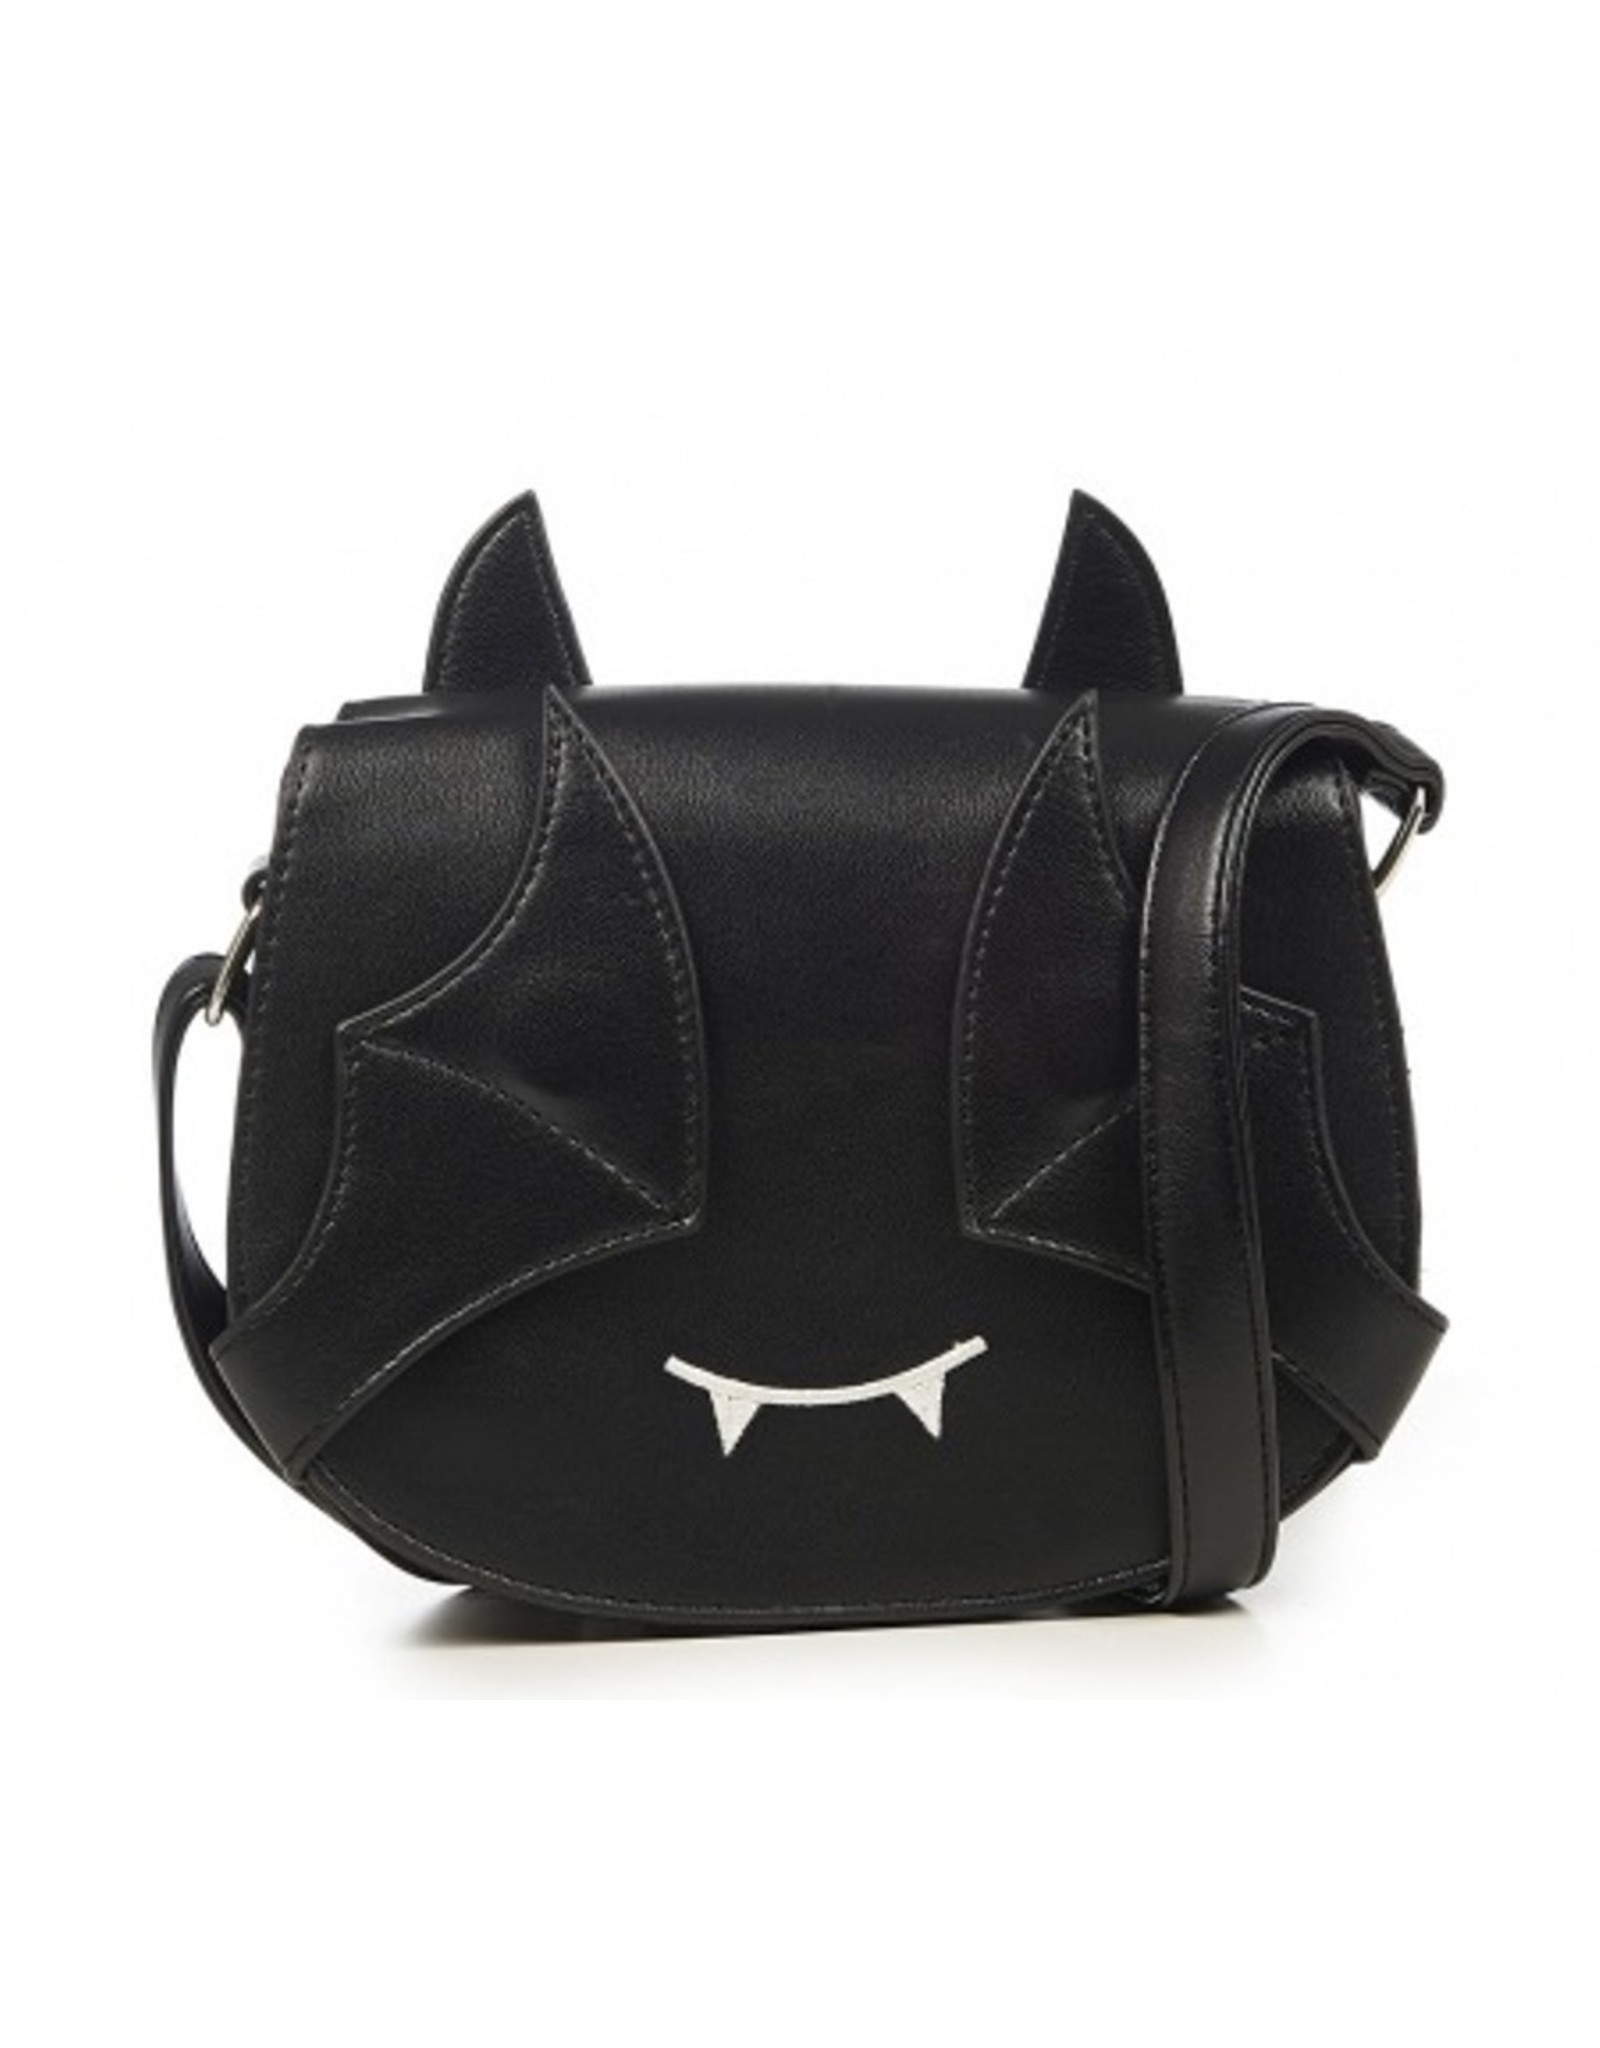 Banned Fantasy bags - Bathead Shoulder bag Release the Bats